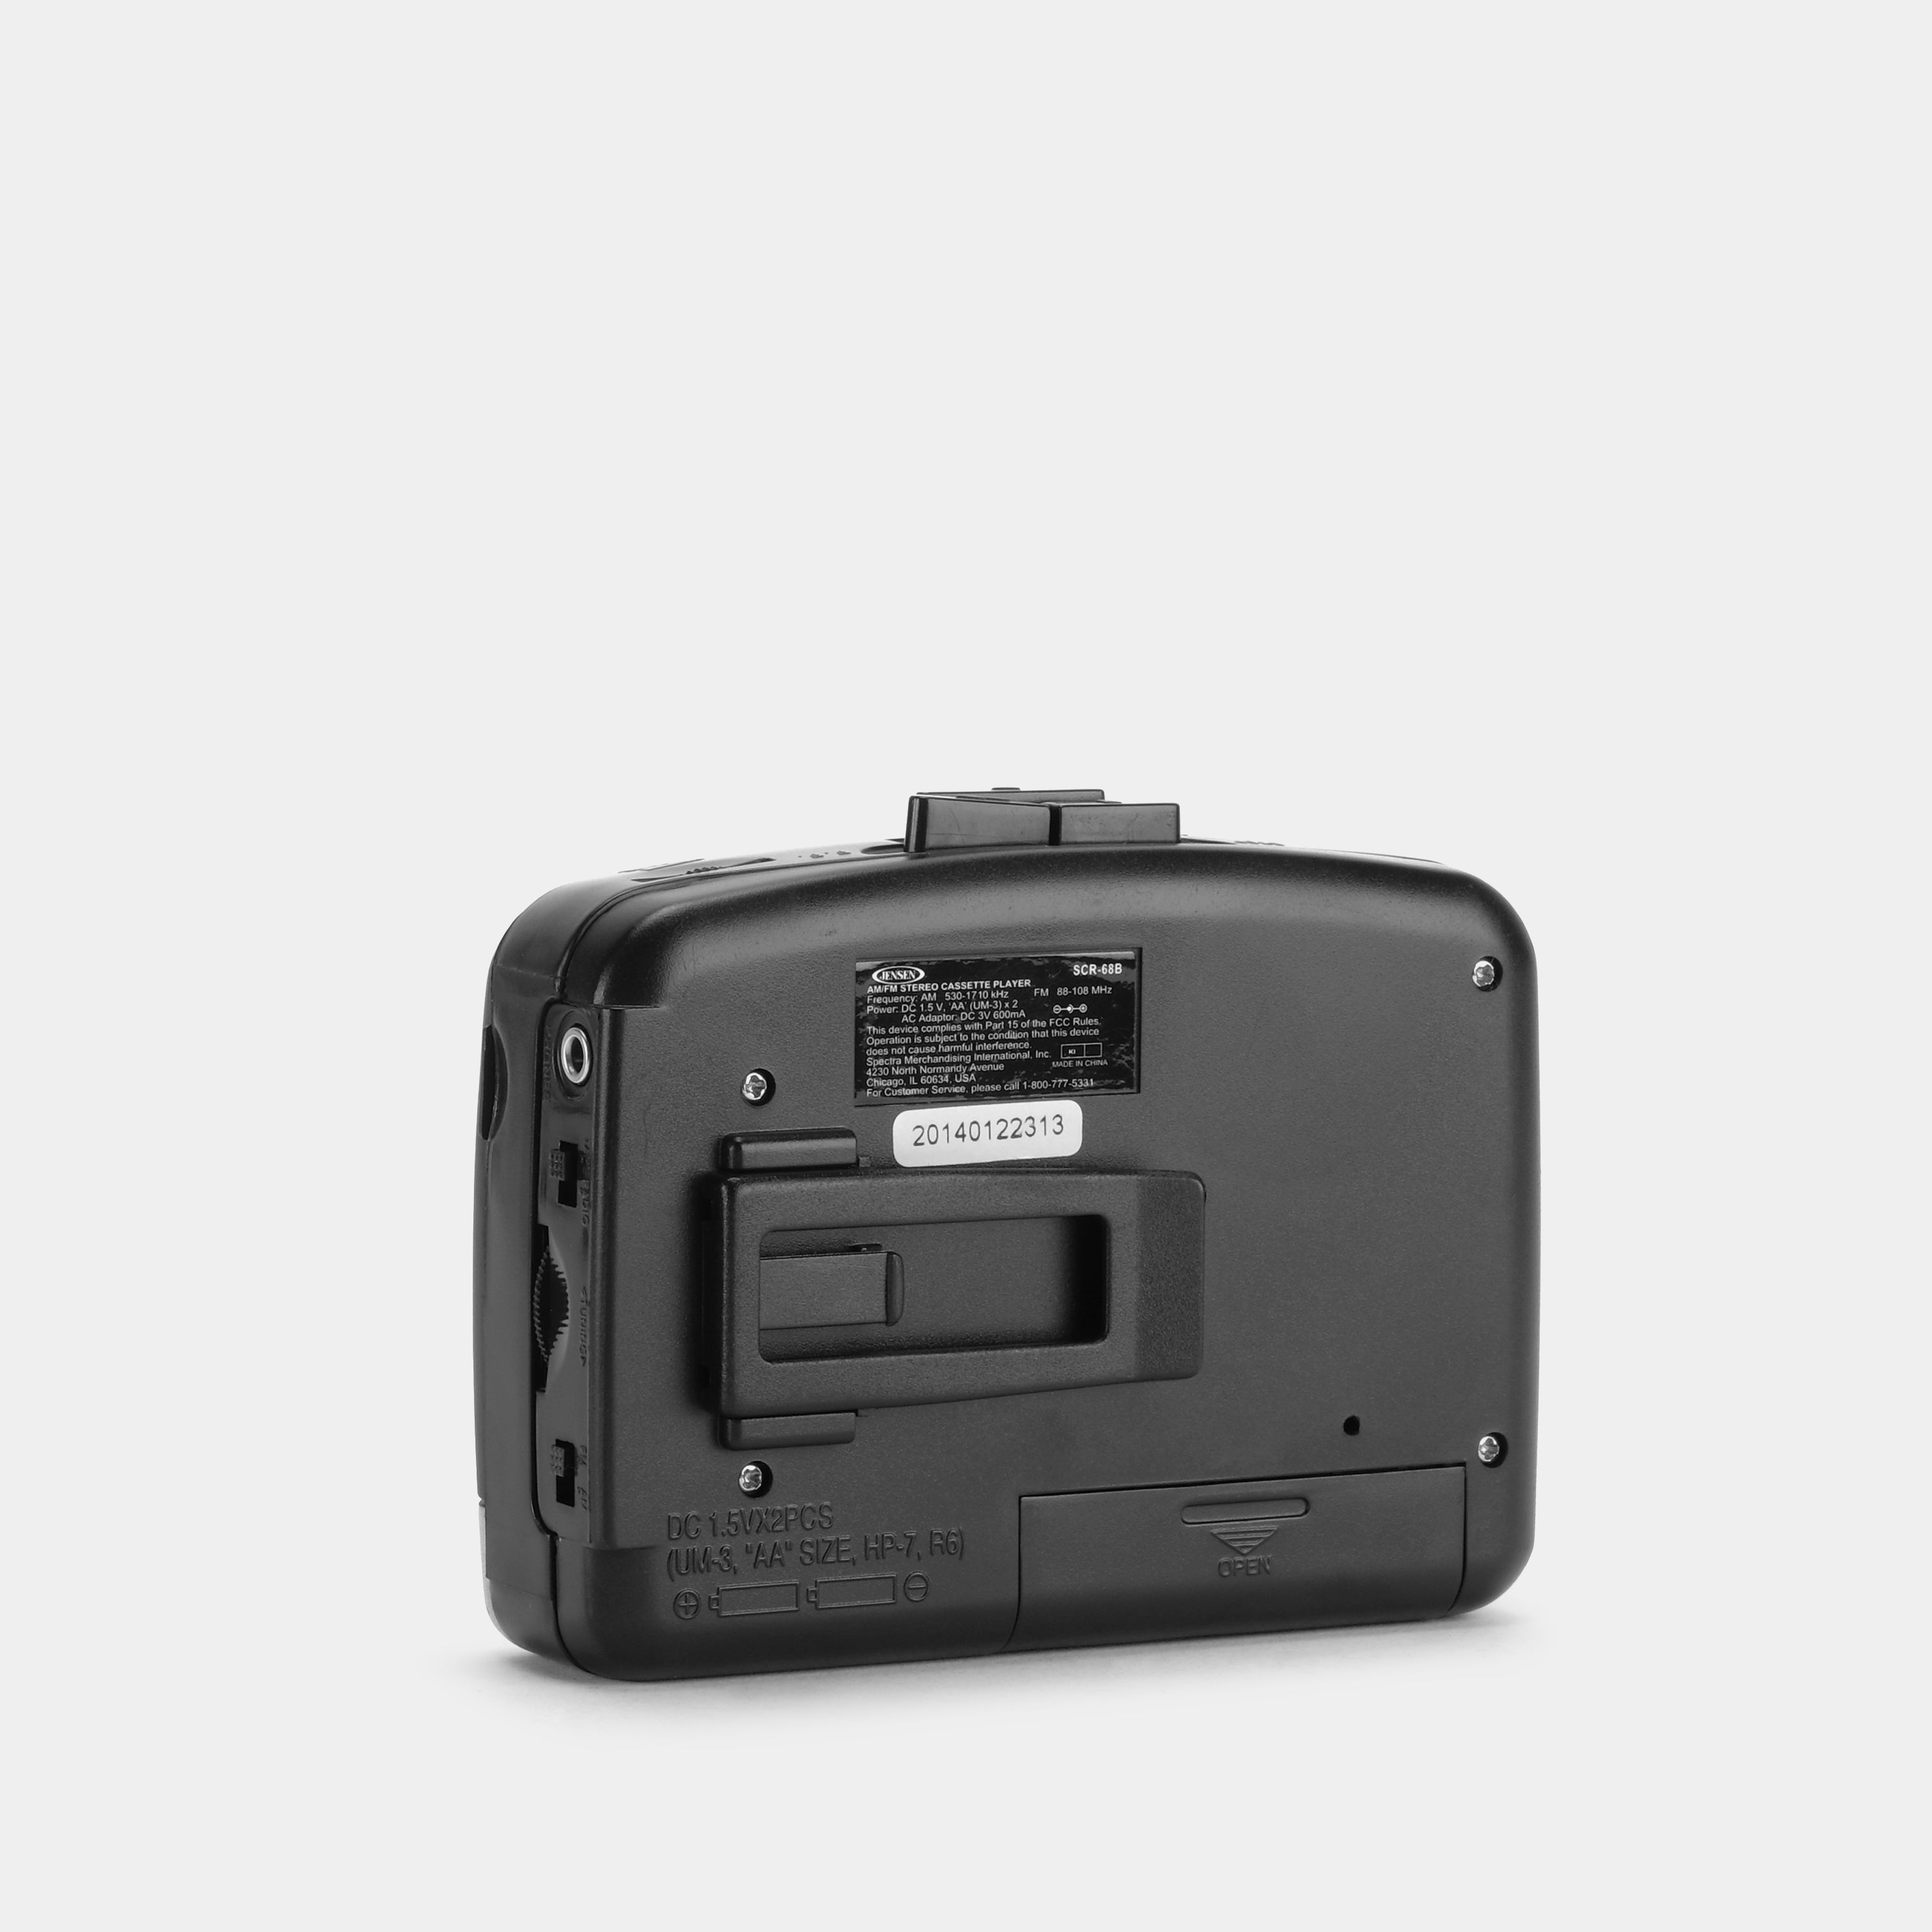 Jensen SCR-68B Portable Cassette Player